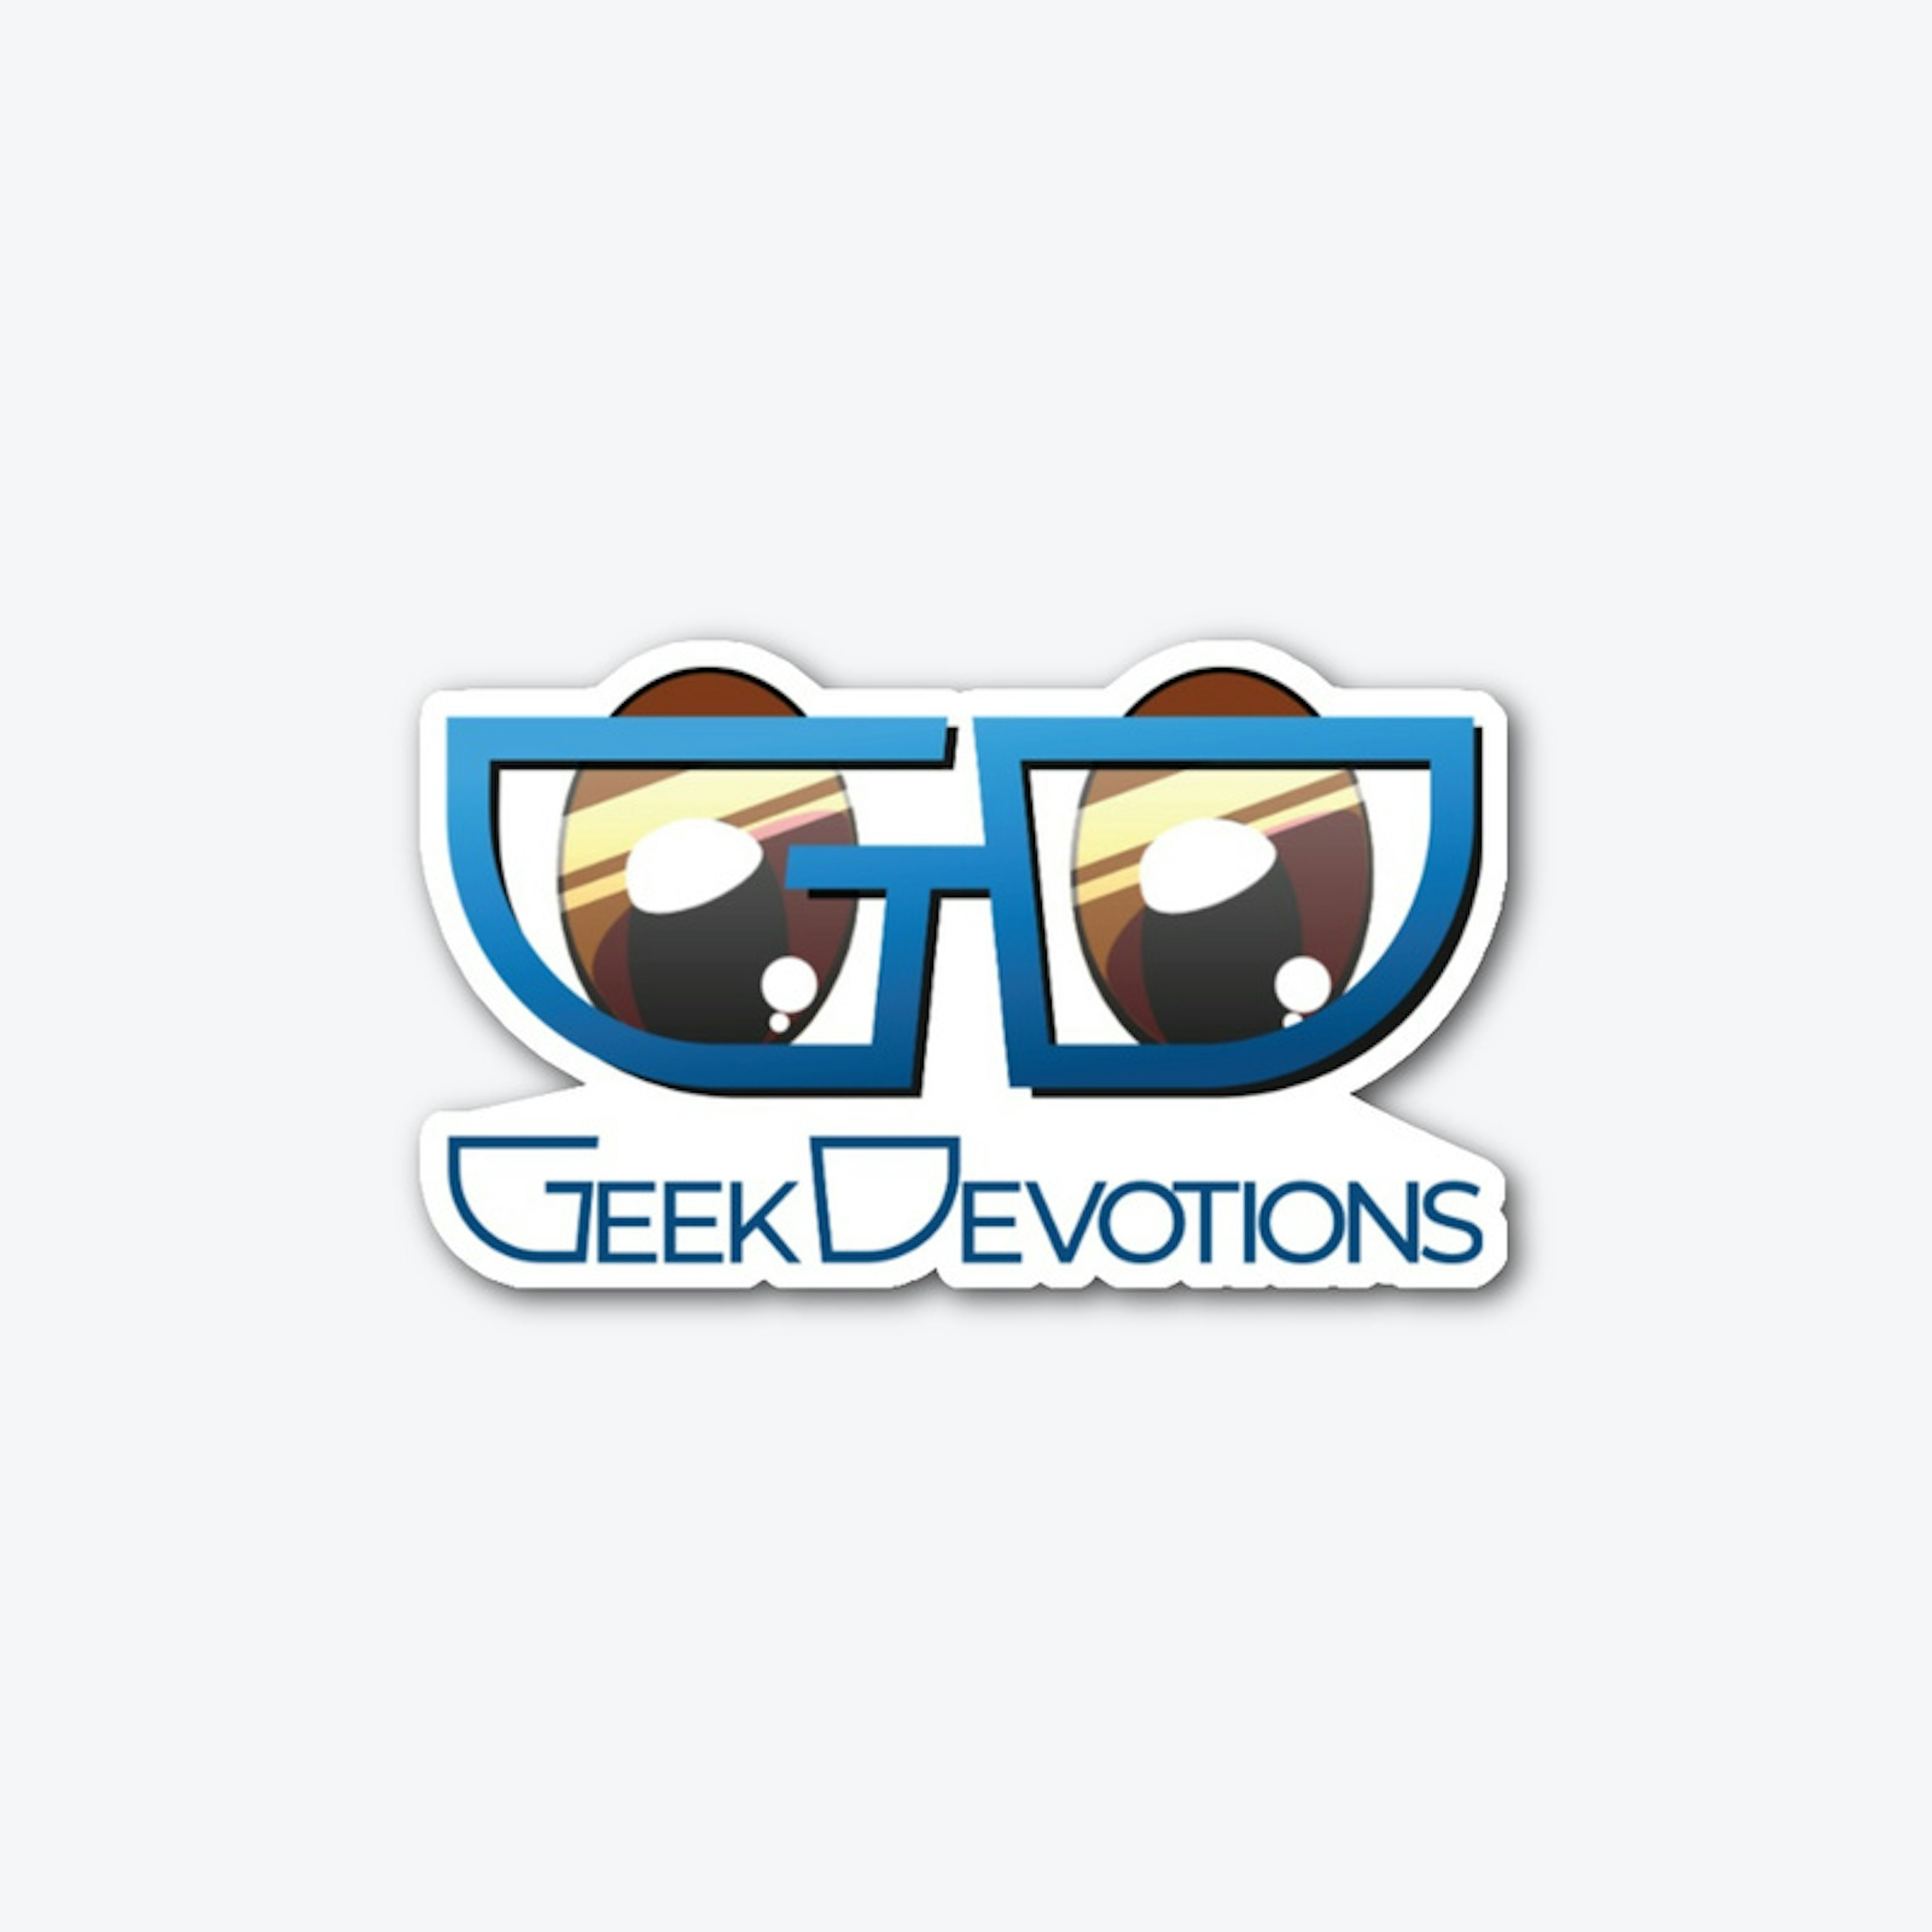 Classic Geek Devotions Logo